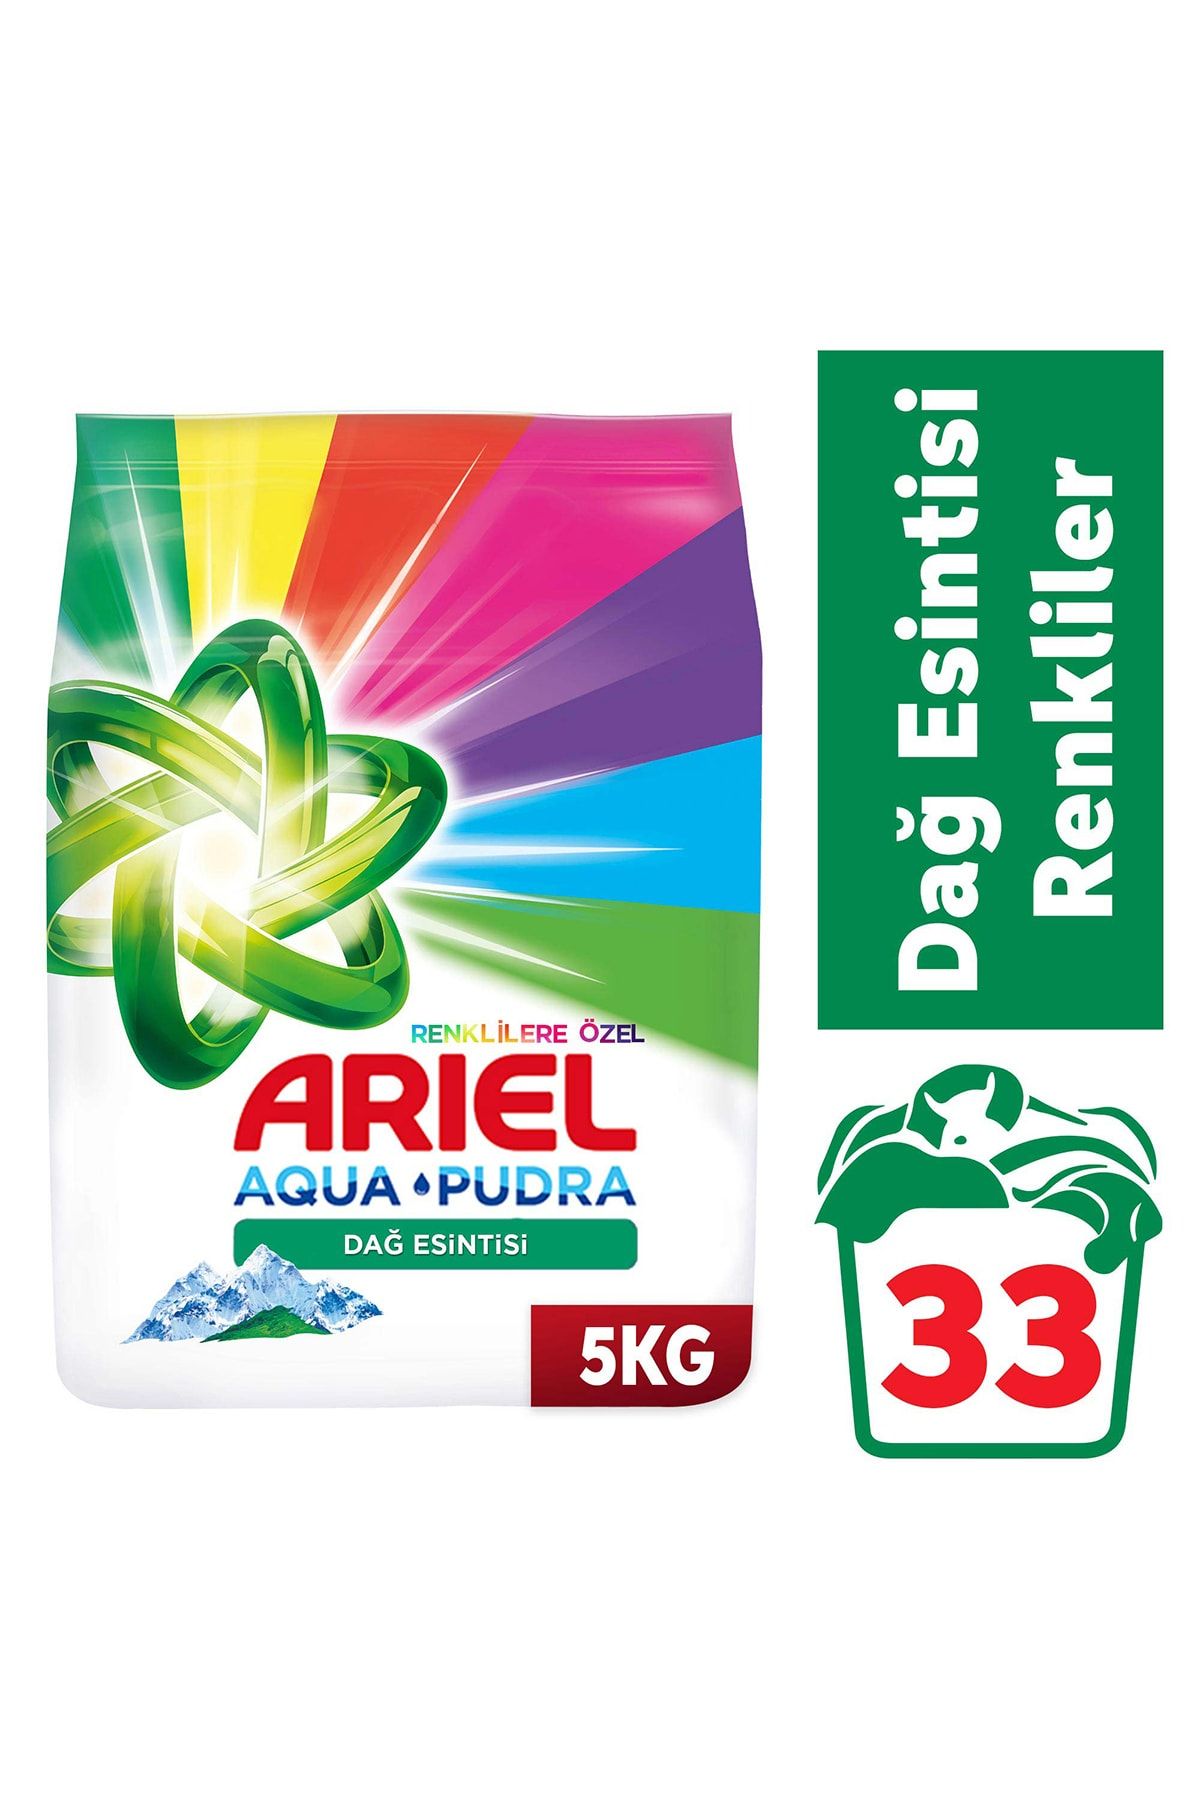 Ariel Dağ Esintisi Renklilere Özel 5 Kg Aquapudra Toz Çamaşır Deterjanı